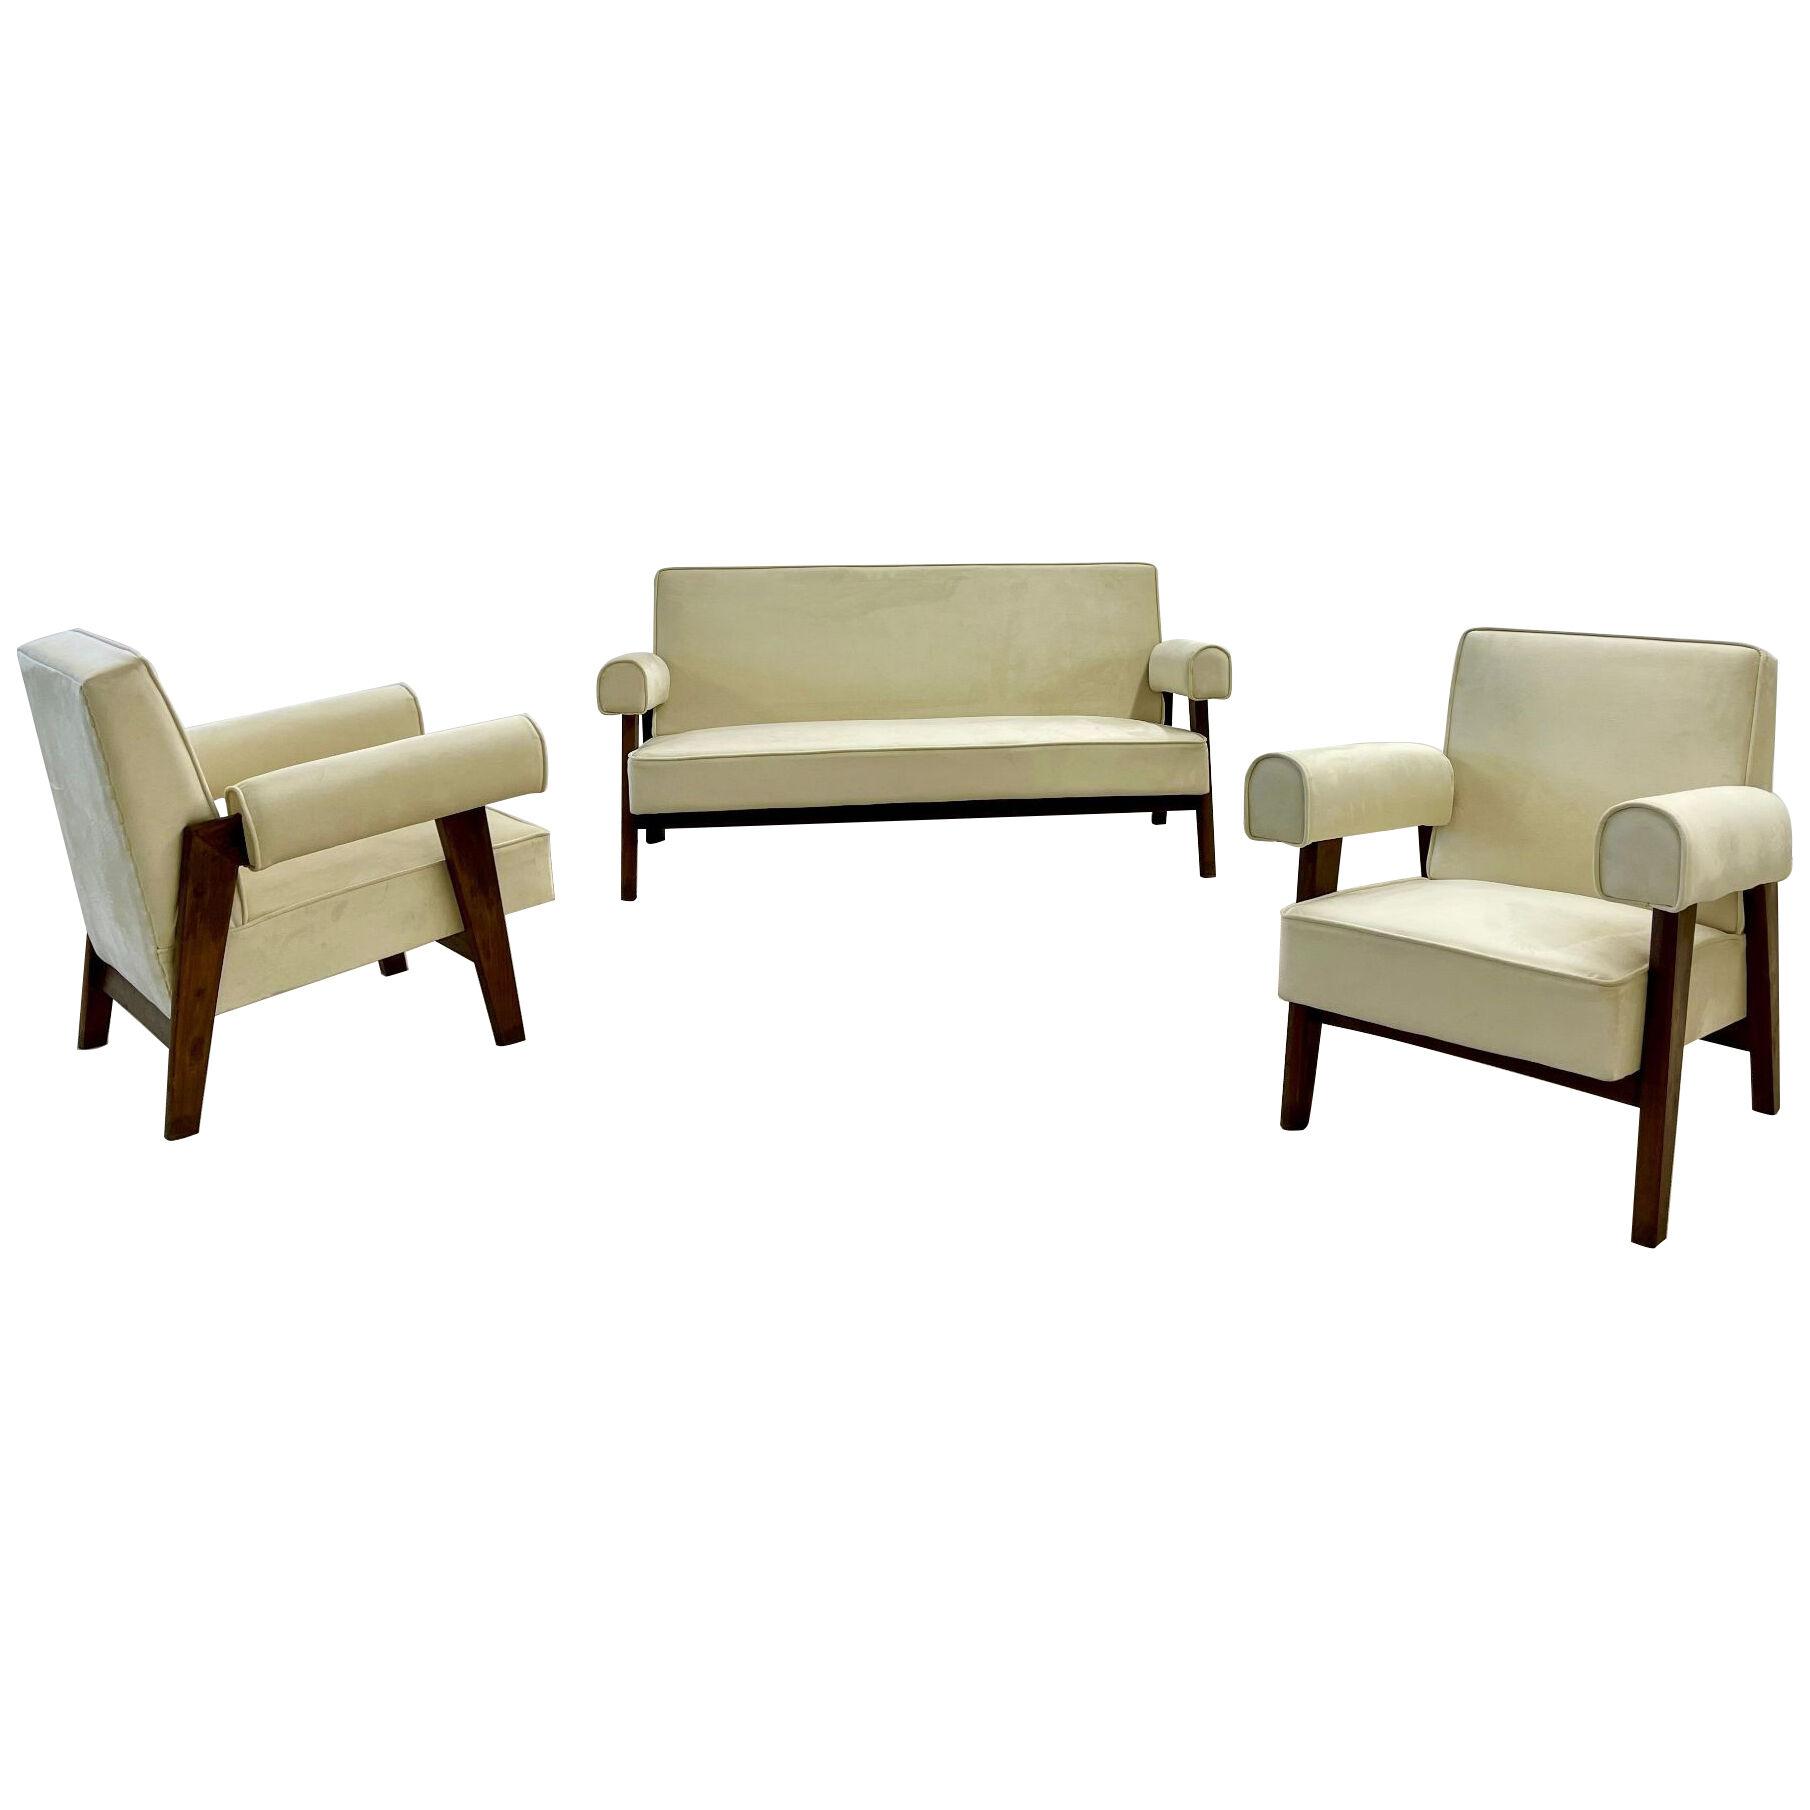 Authentic Pierre Jeanneret Upholstered Bridge Sofa/Chair Set, Mid-Century Modern